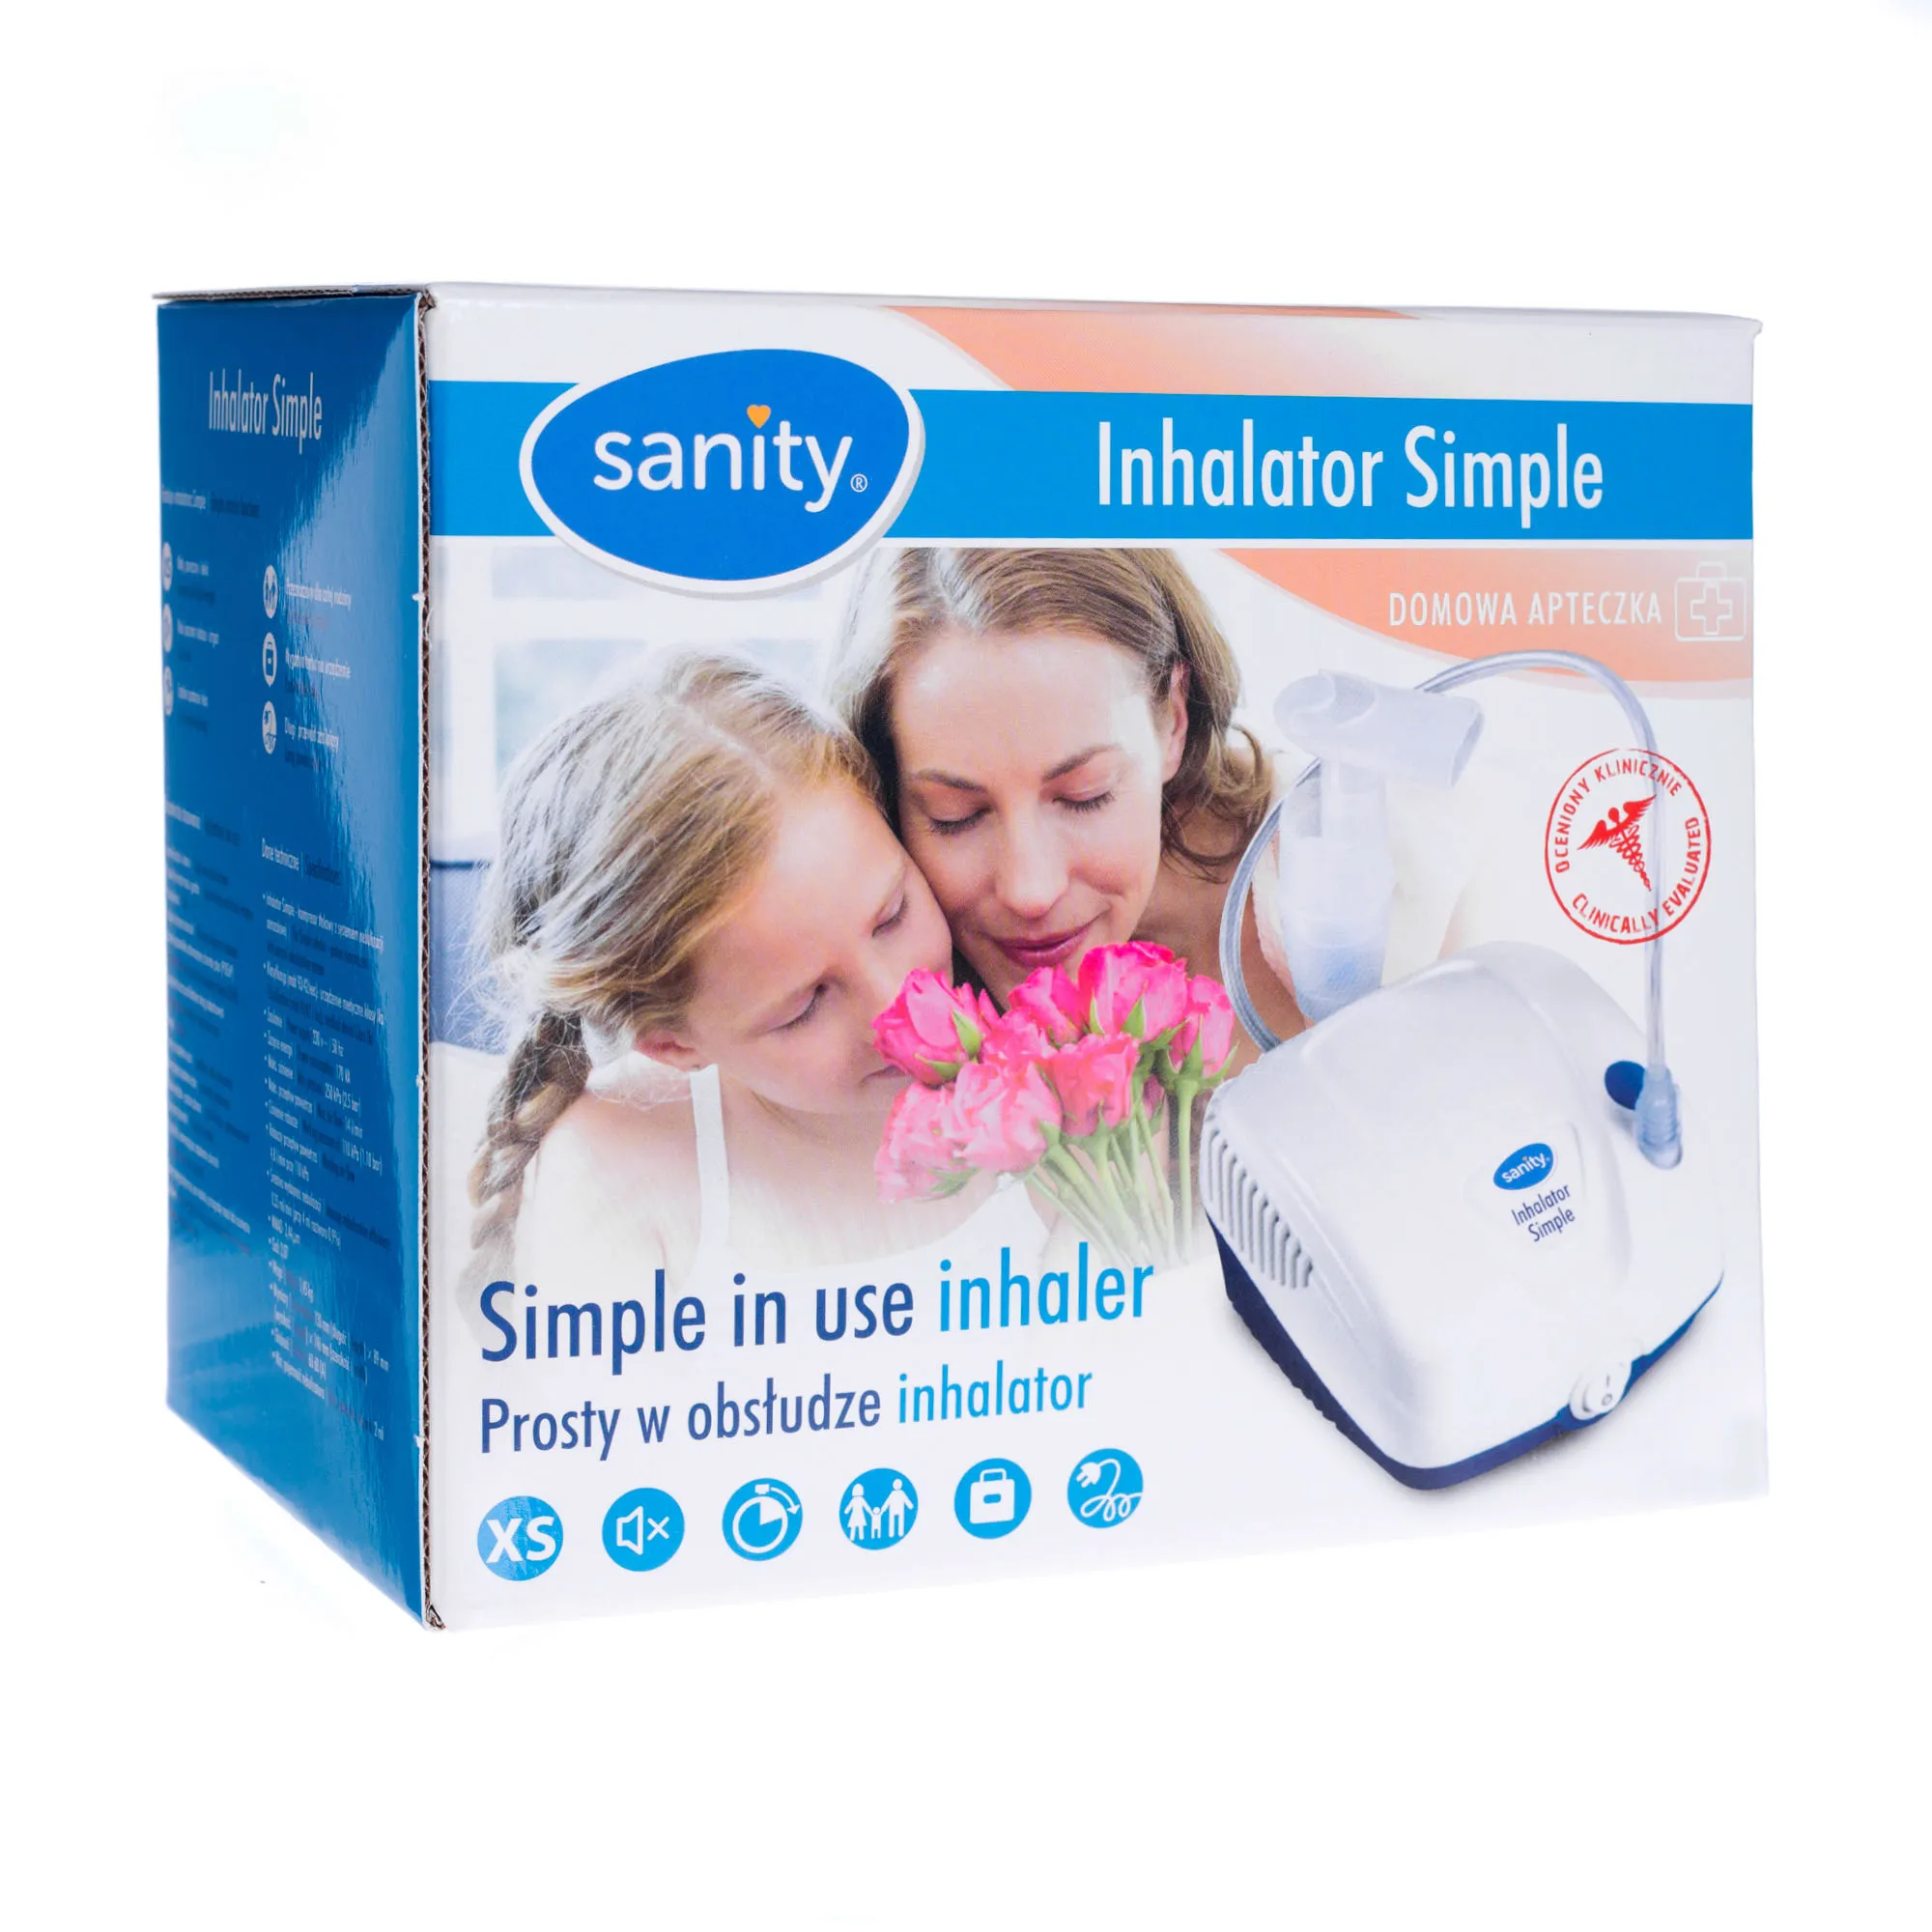 Inhalator Sanity Smart&Easy , inhalator 1 sztuka.